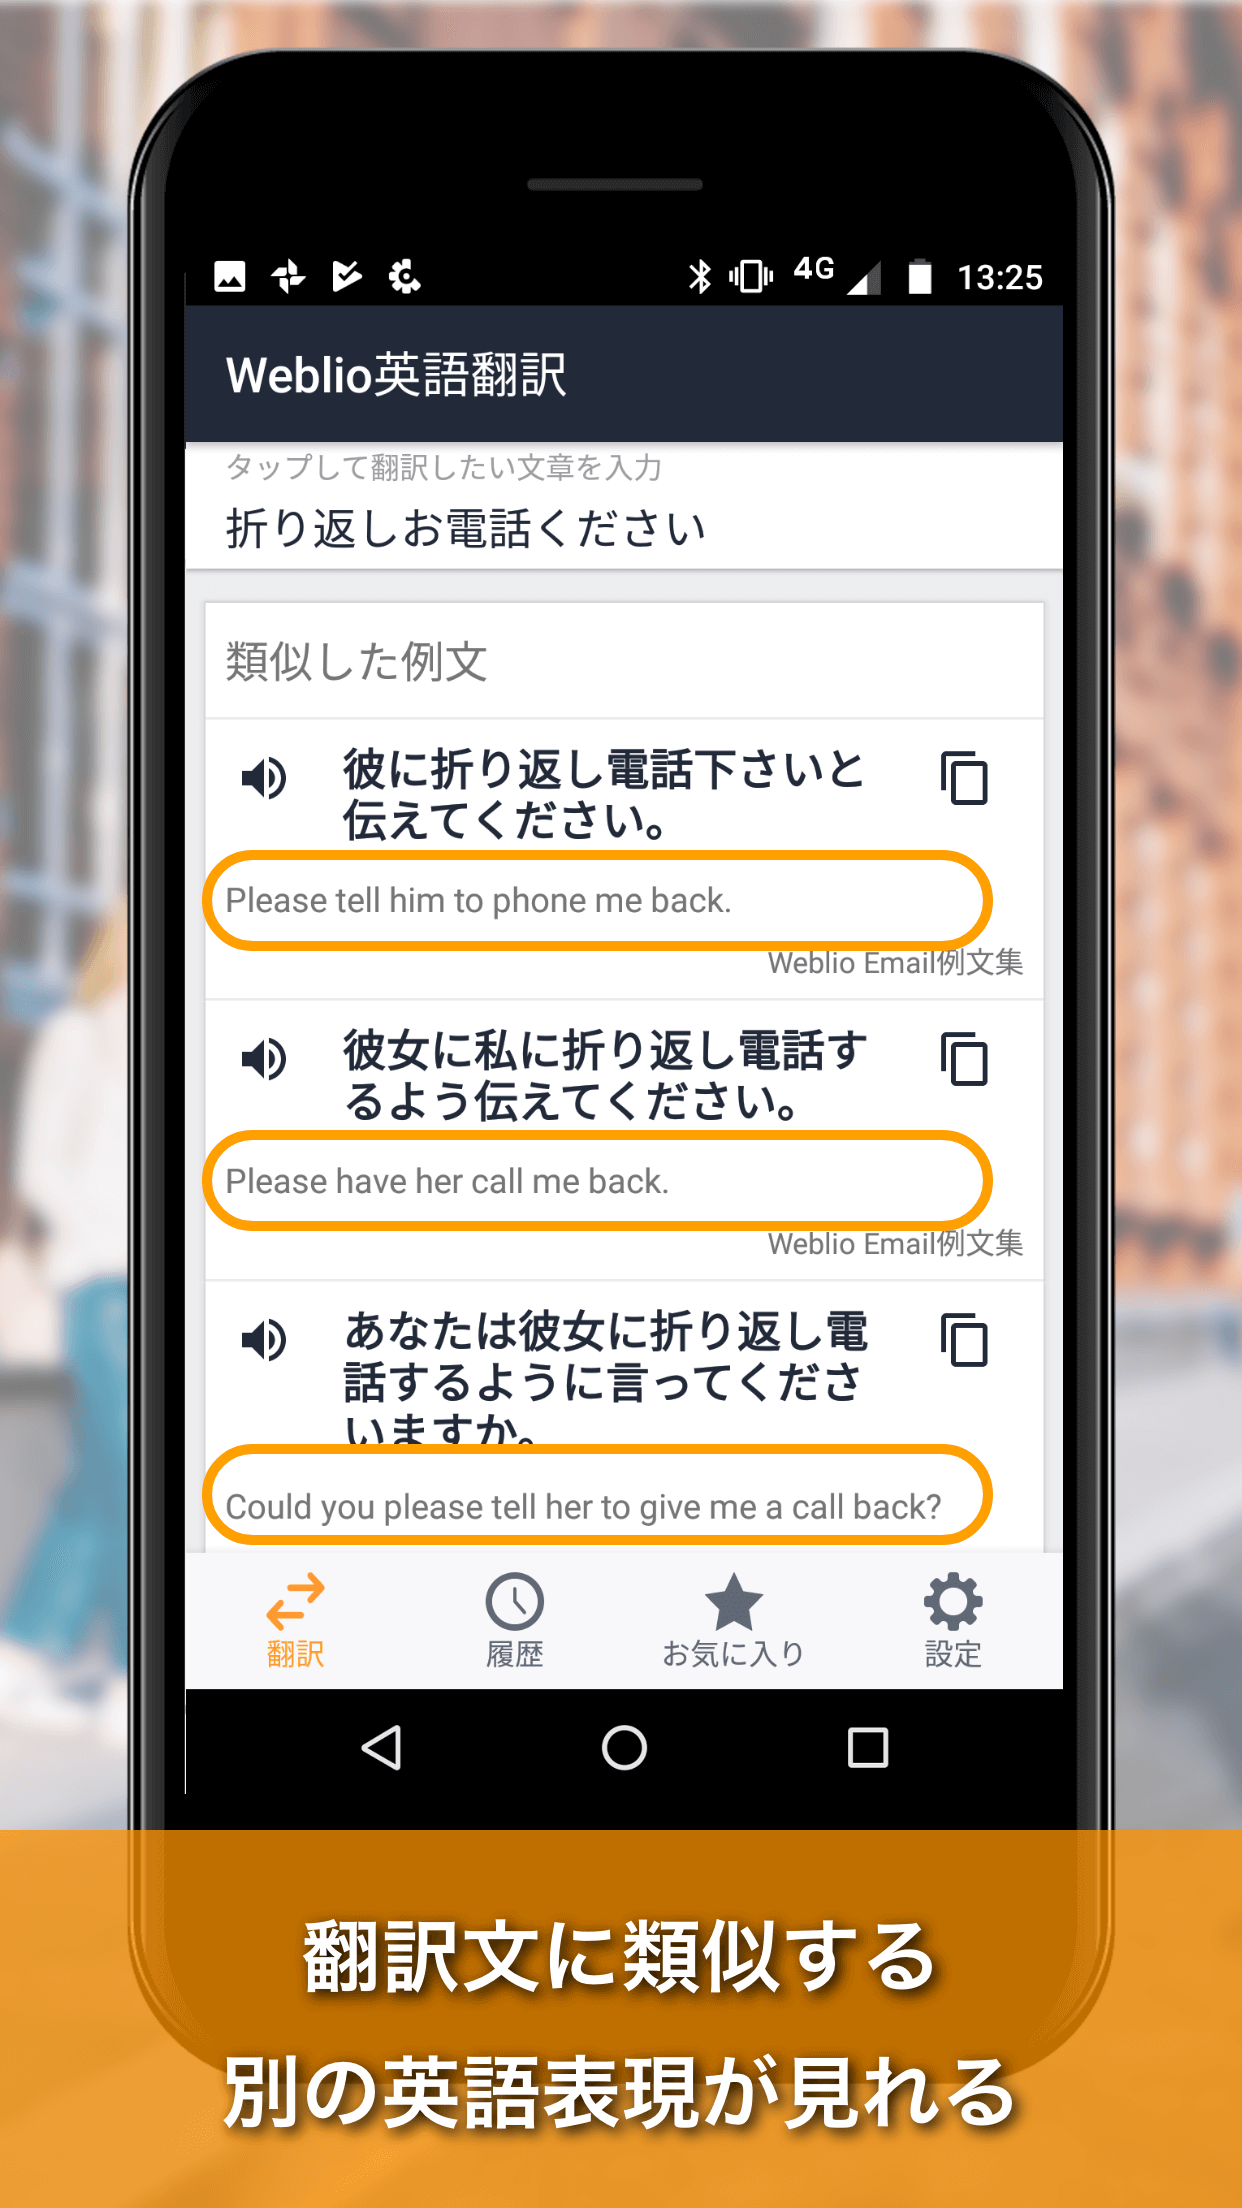 Android application Japanese Translate Weblio - translation・dictionary screenshort